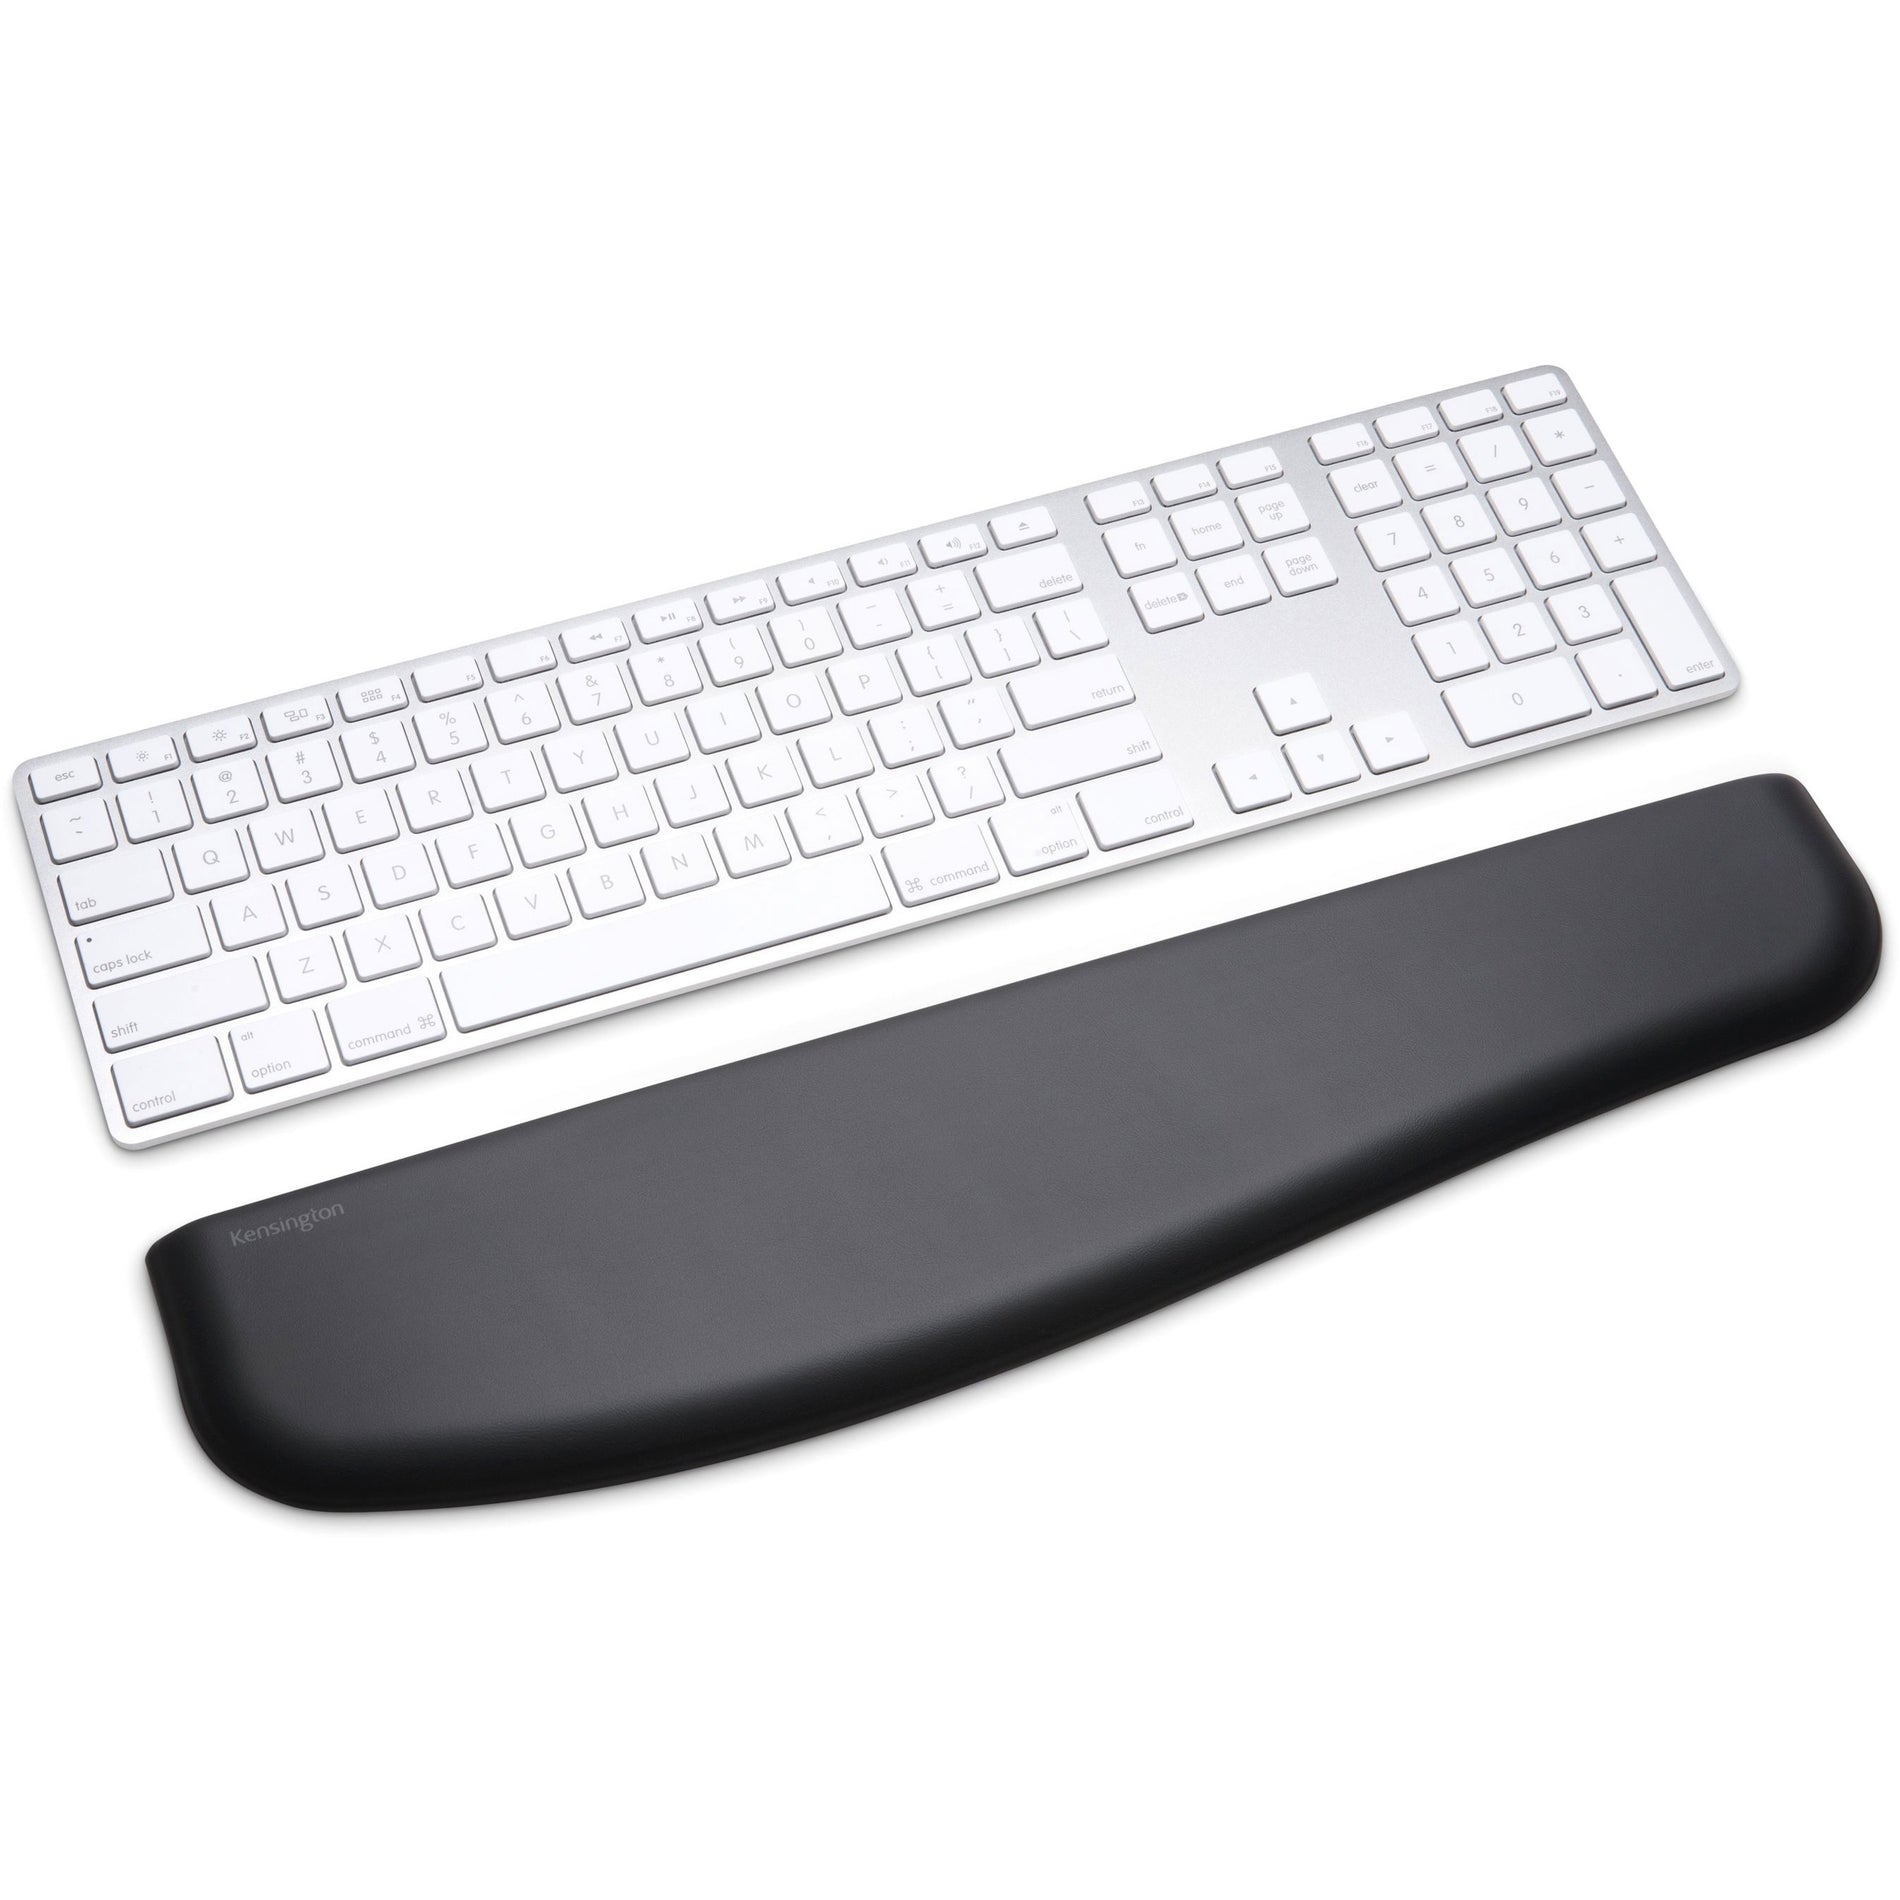 Kensington K52800WW ErgoSoft Wrist Rest for Slim Keyboards, Comfortable Gel Support for Keyboard Typing